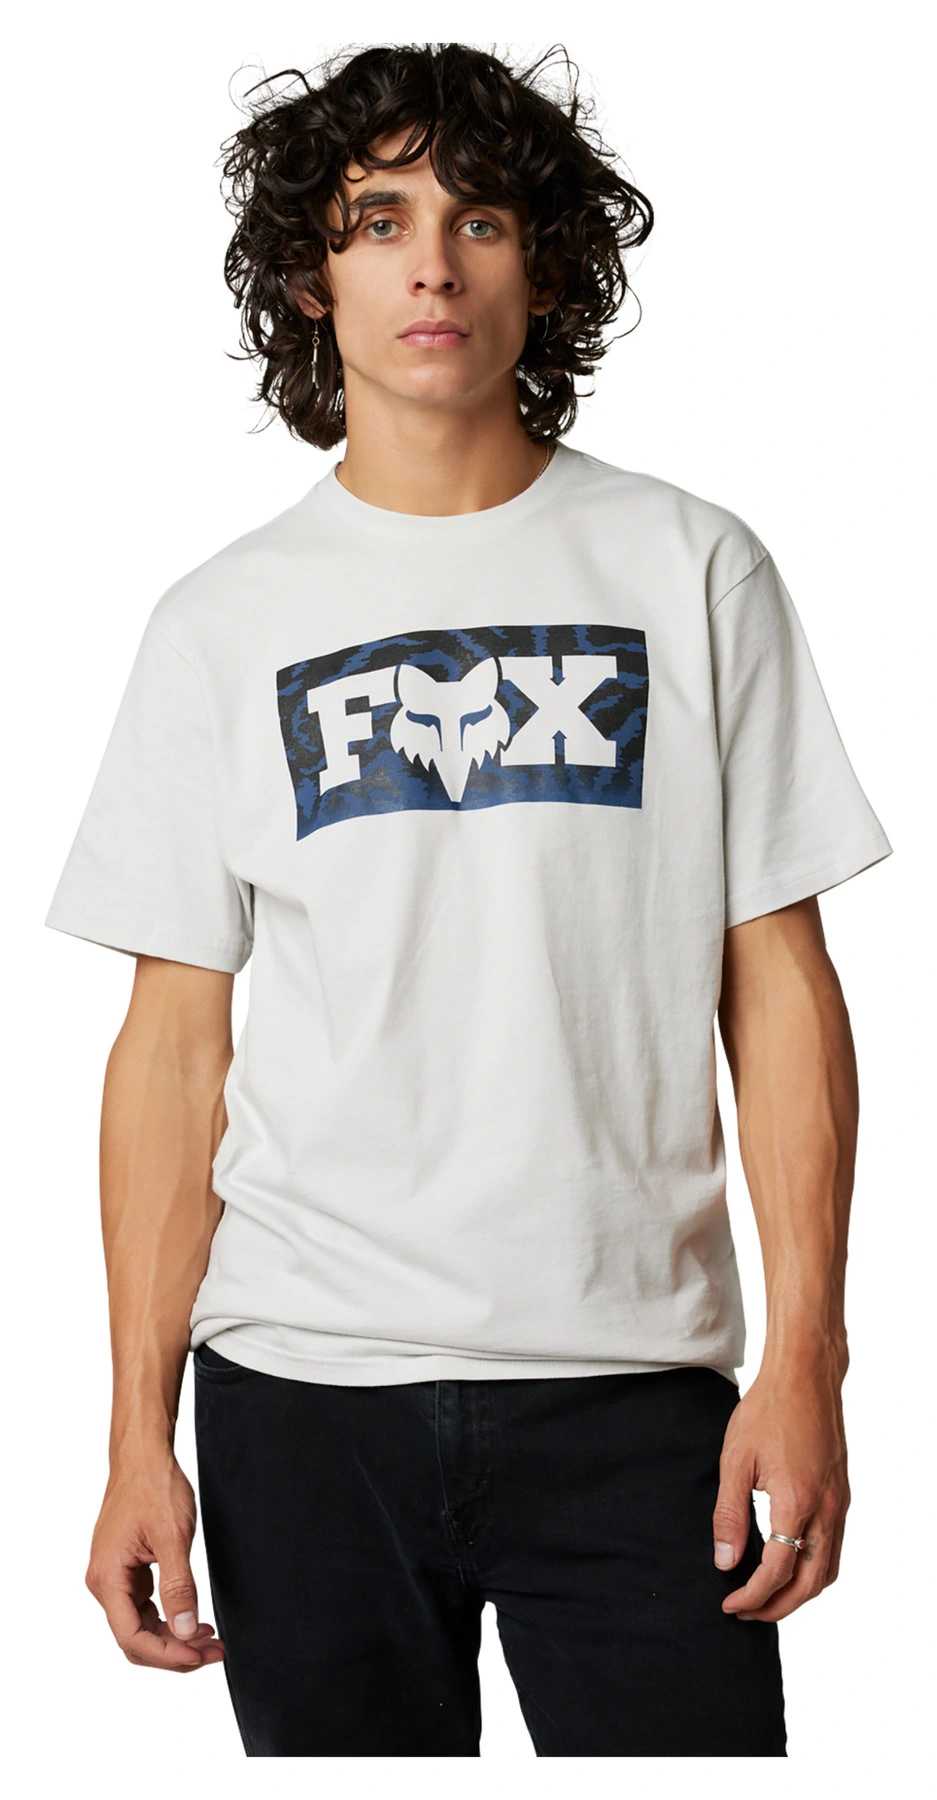 T-SHIRT FOX NUKLR, T. XL